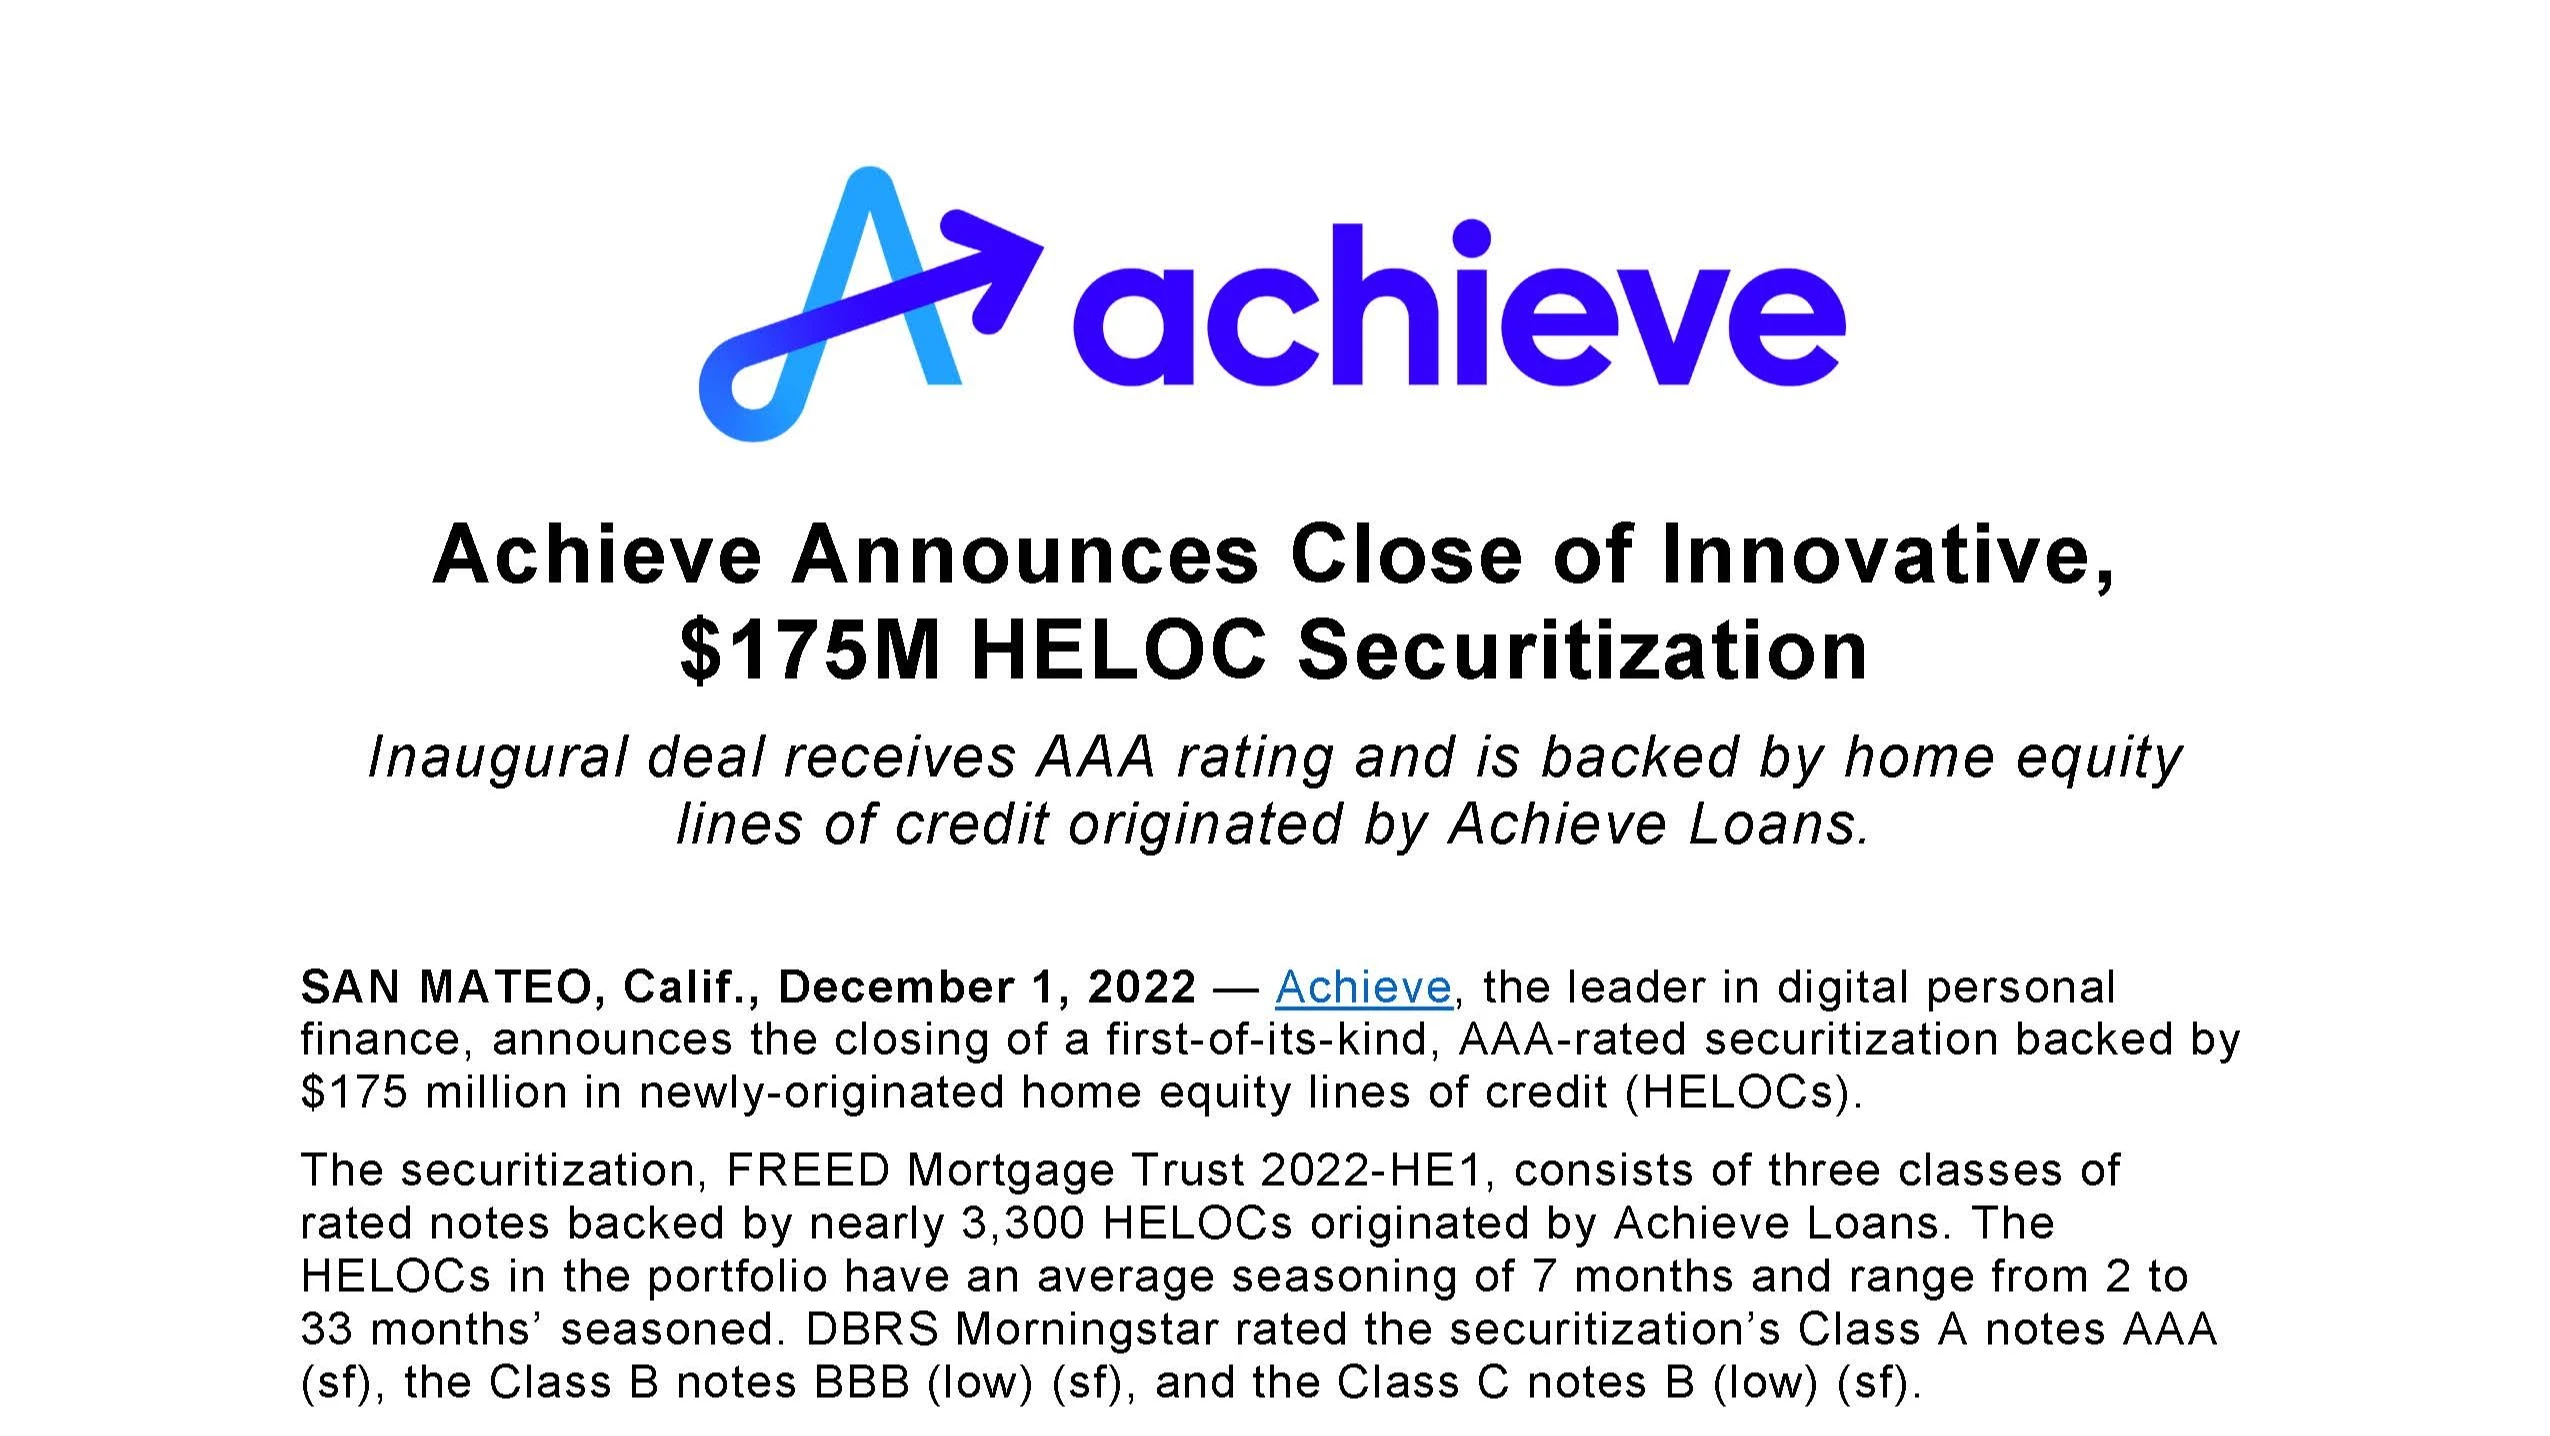 achieve-announces-close-of-innovative-175m-heloc-securitization.jpg